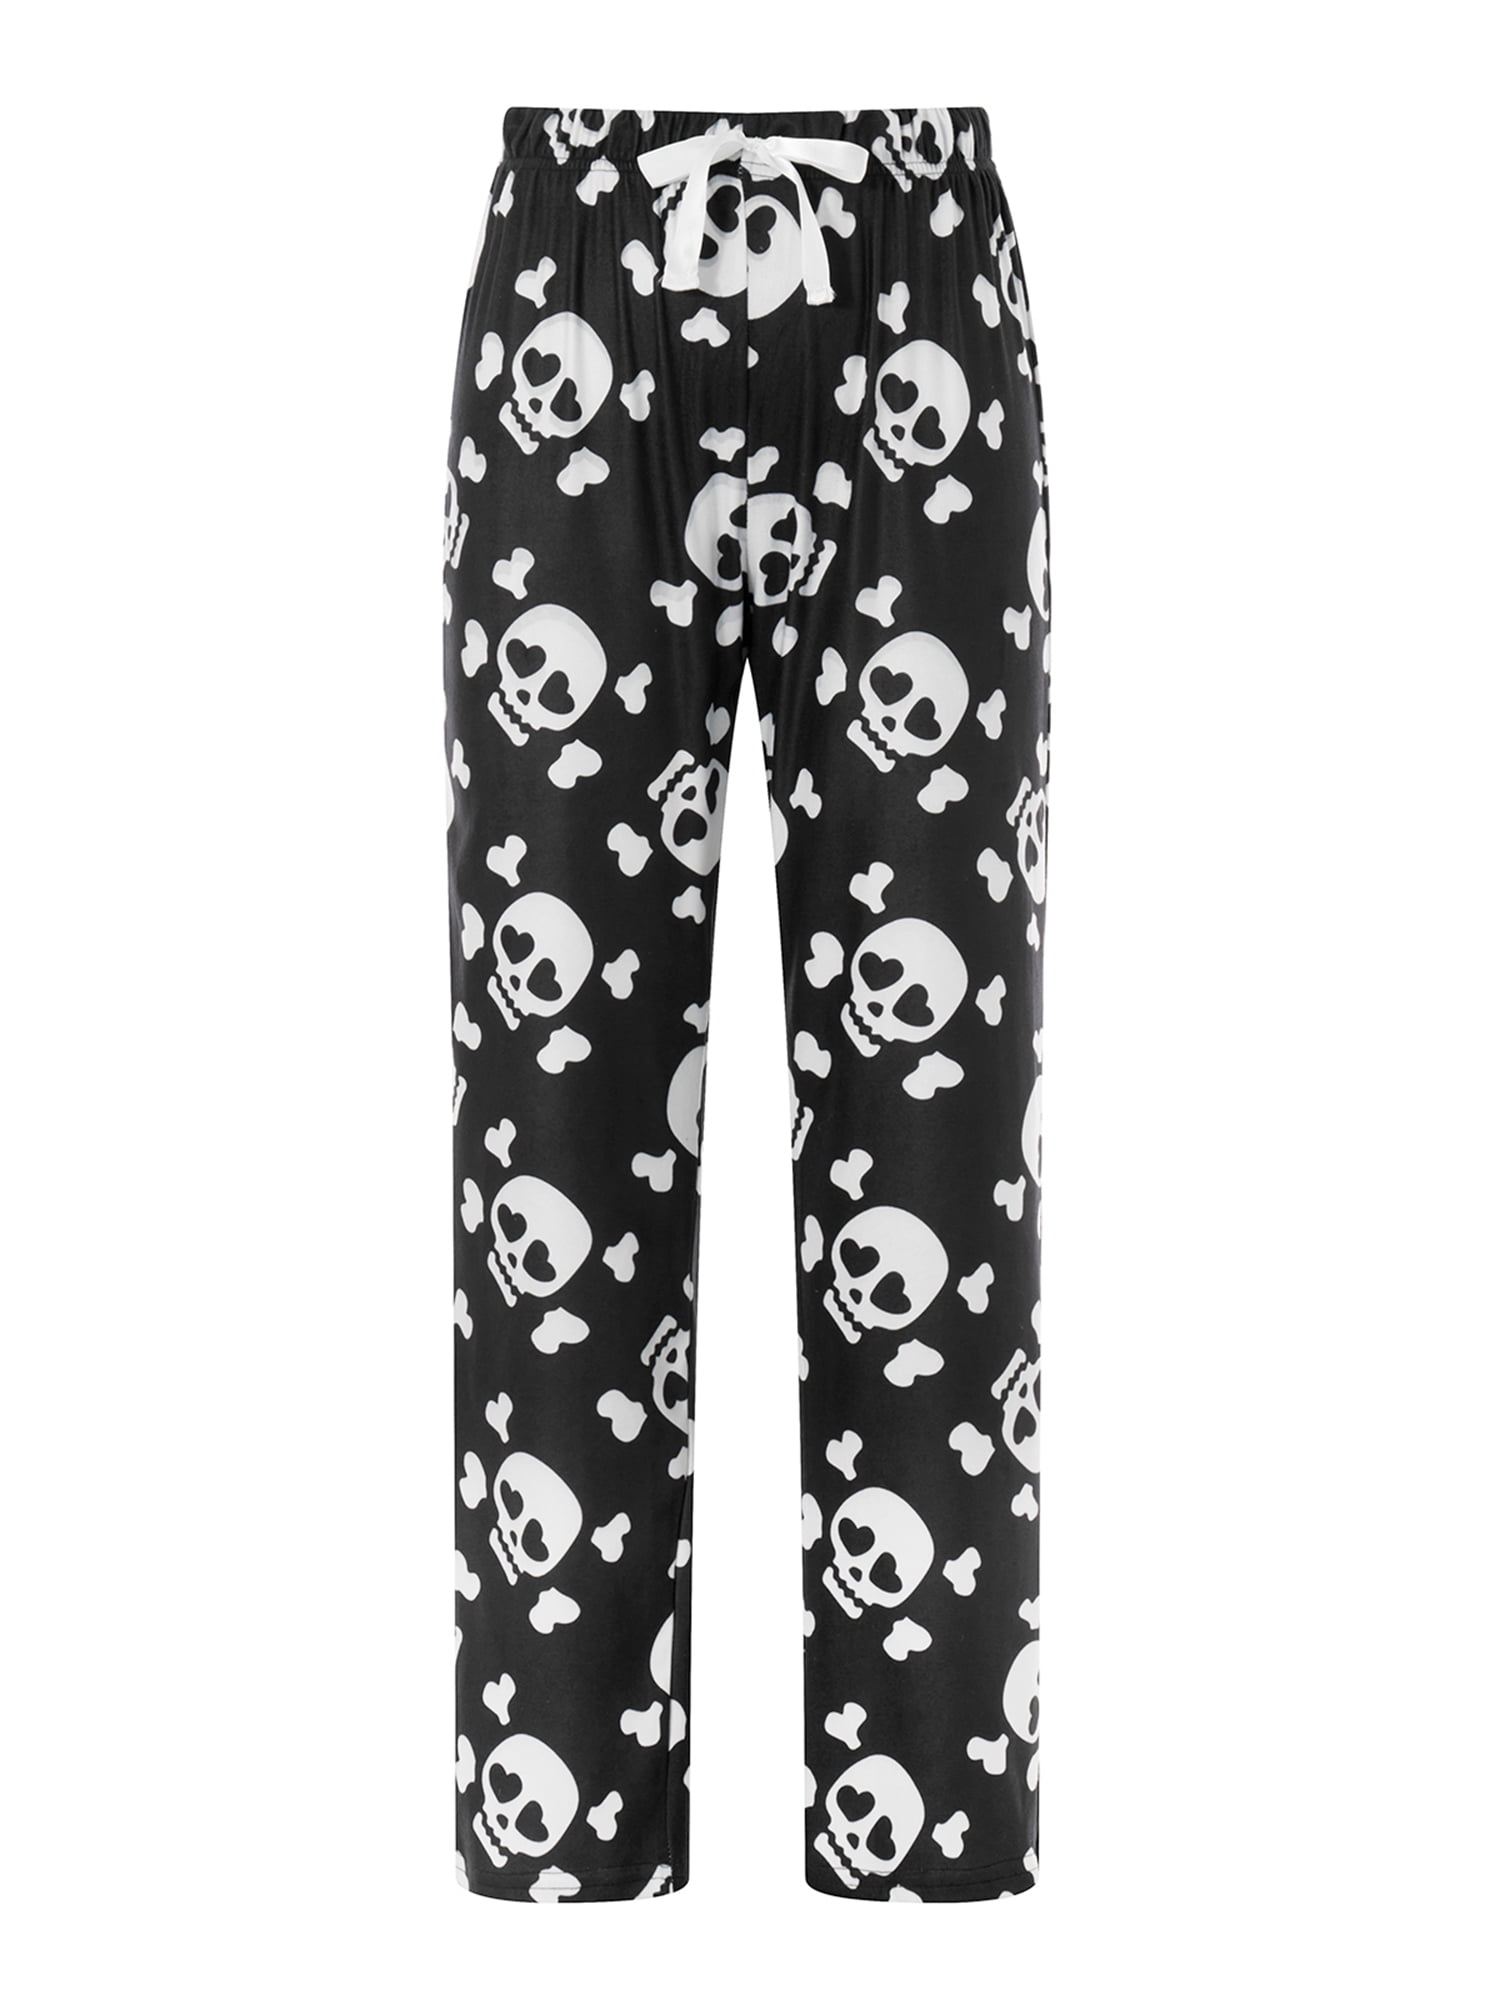 Sprifallbaby Women's Fuzzy Pajama Pants Sleepwear Skull Print Elastic Waist  Long Pants Thickened Nightwear Lounge Bottoms